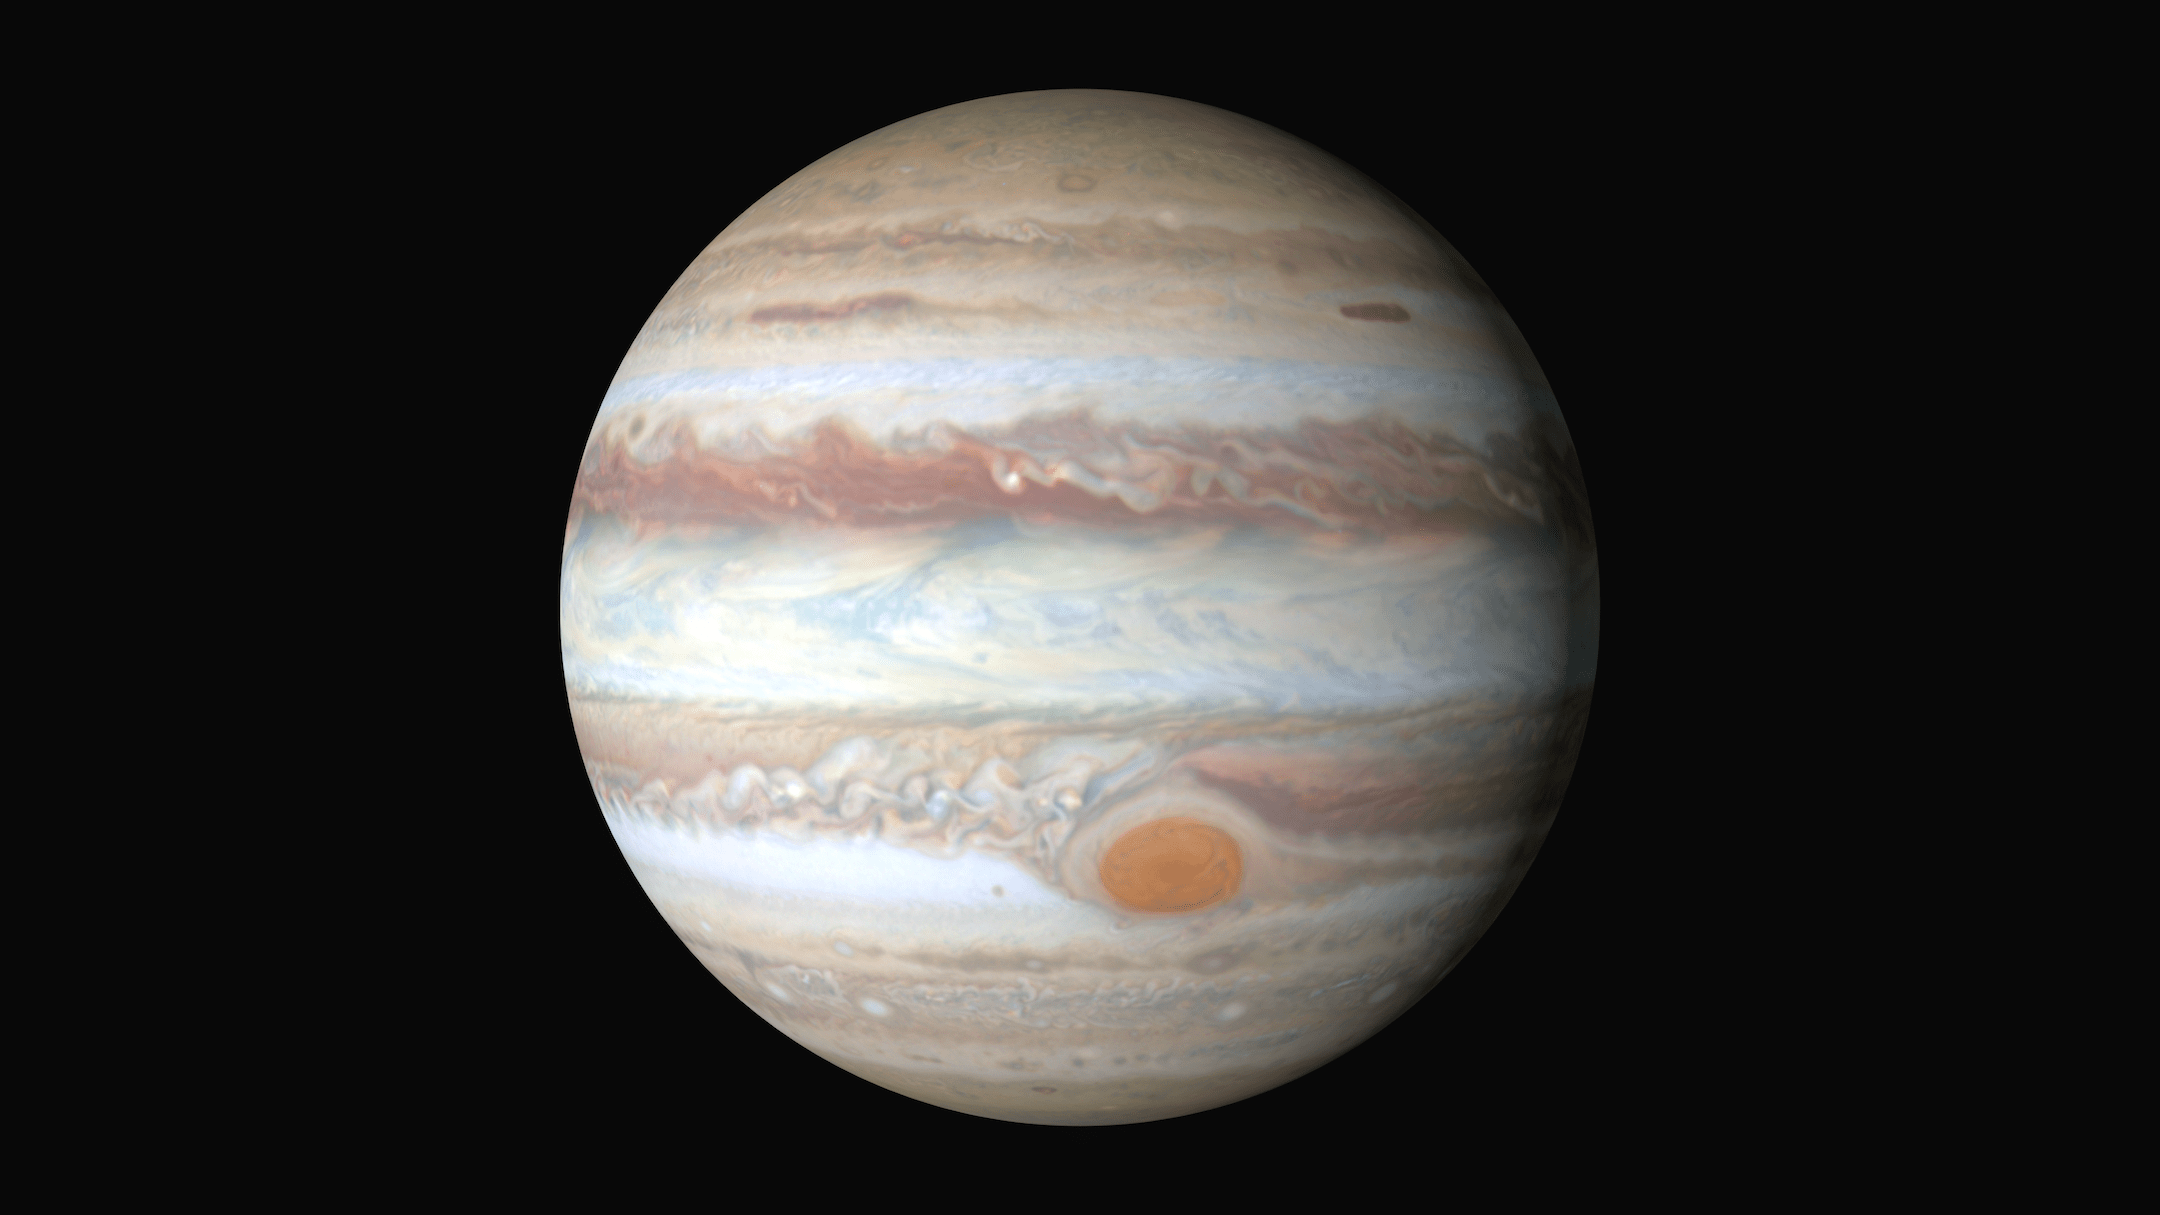 Jupiter in 4k Ultra HD